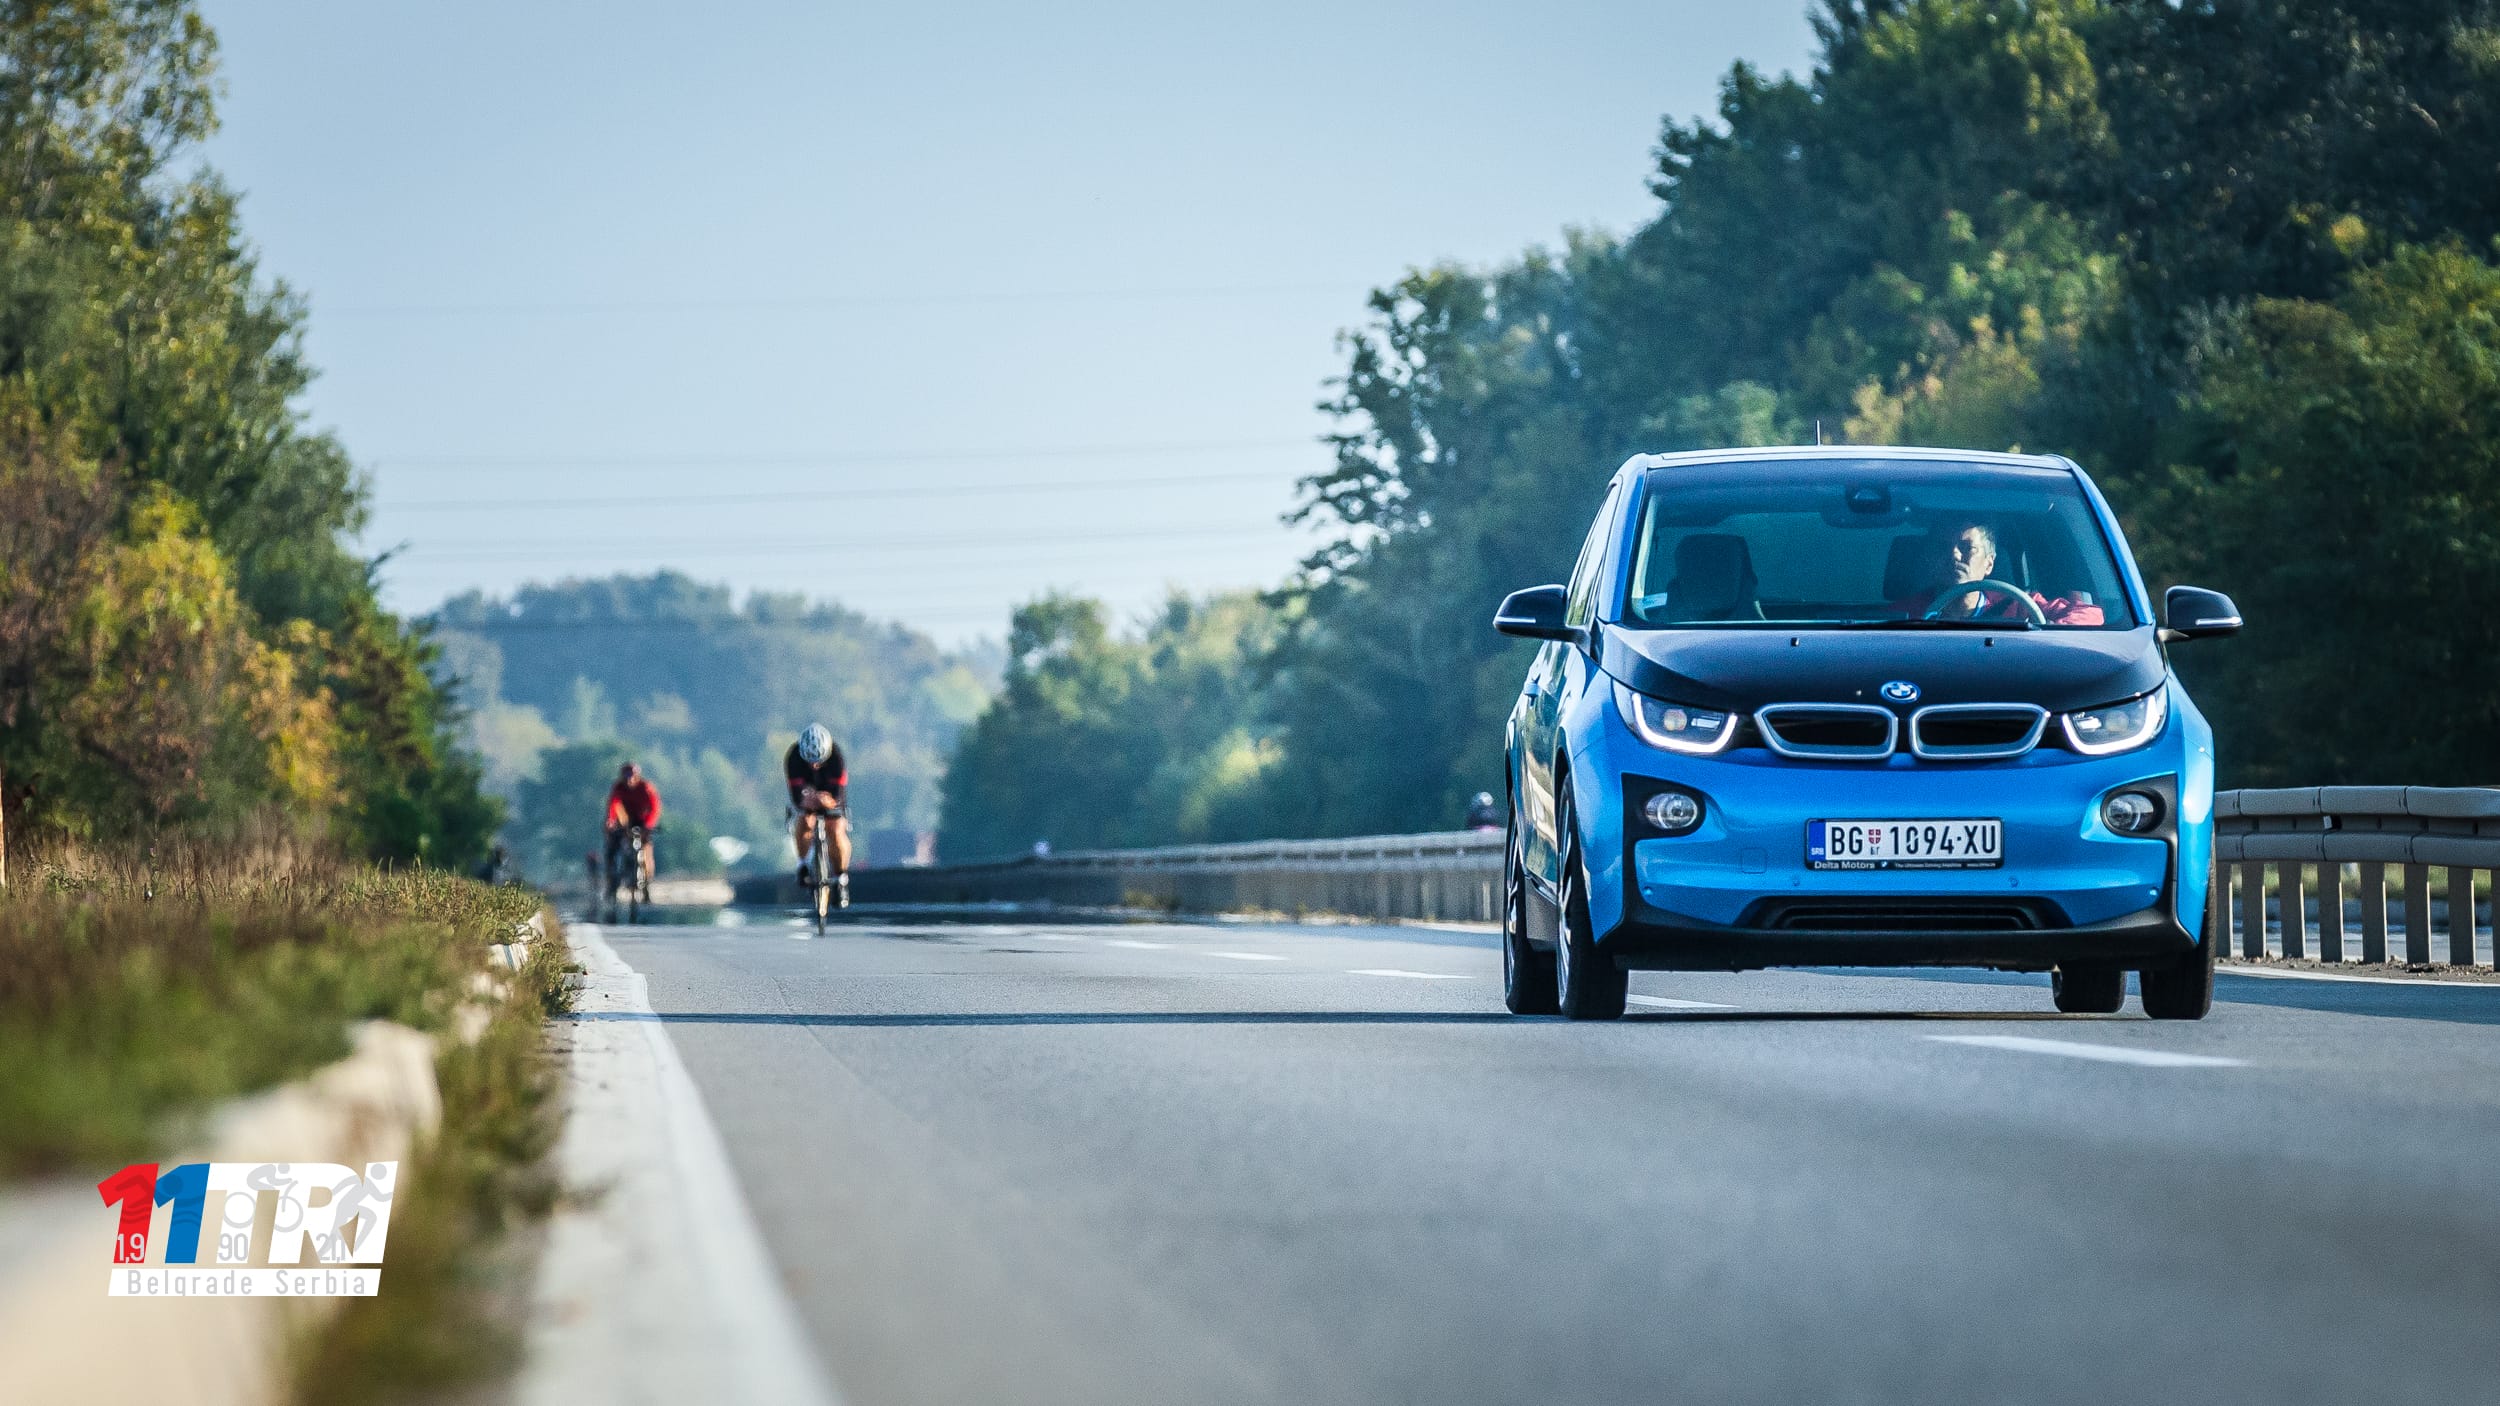 BMW i3 predvodnik Triatlon trke u Beogradu